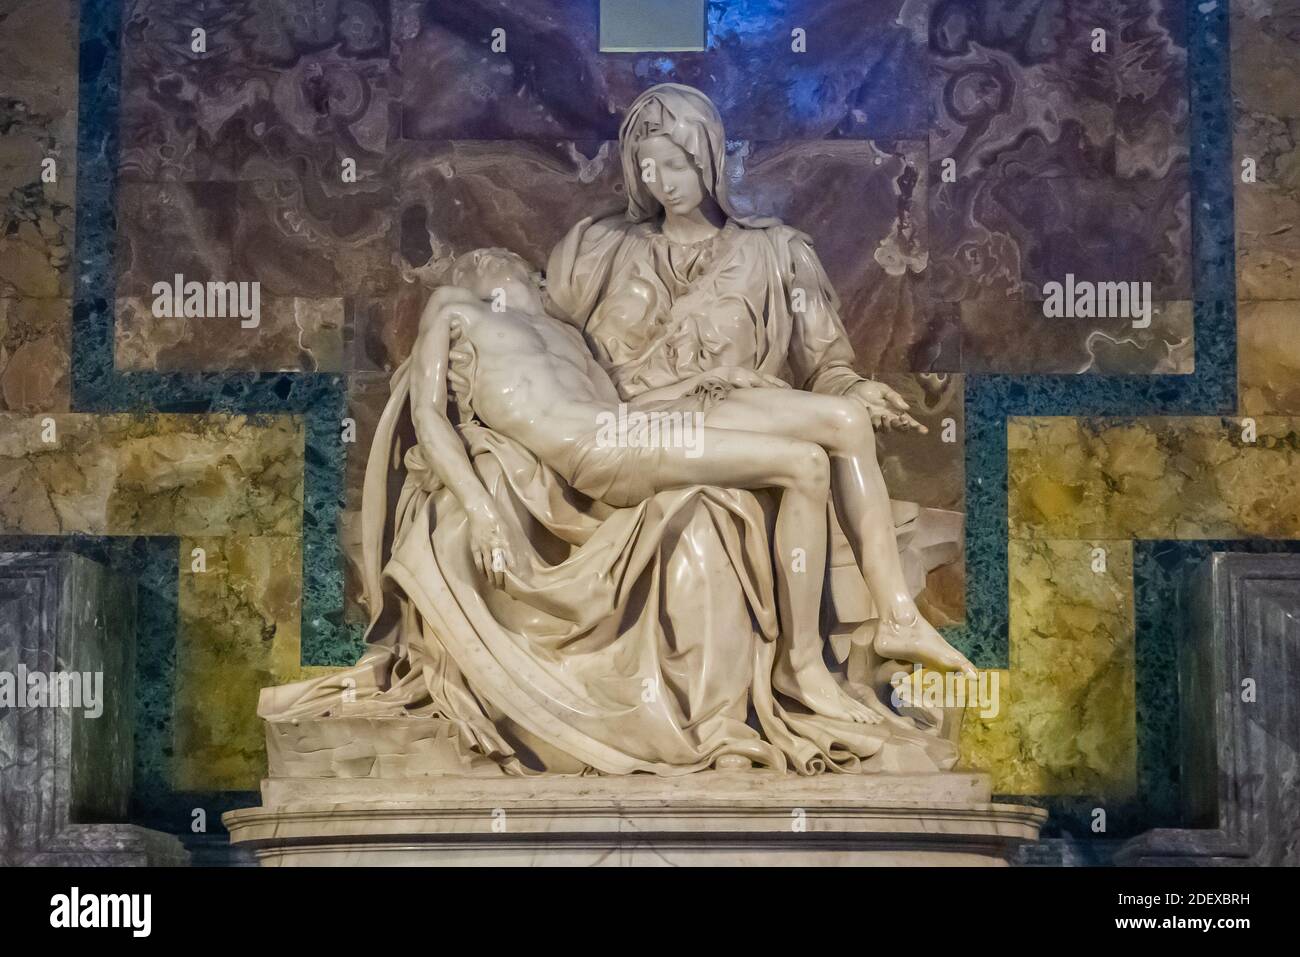 Michelangelo La Pieta Statue - die selige Jungfrau Maria hält tot Jesus Christus Körper. Stockfoto